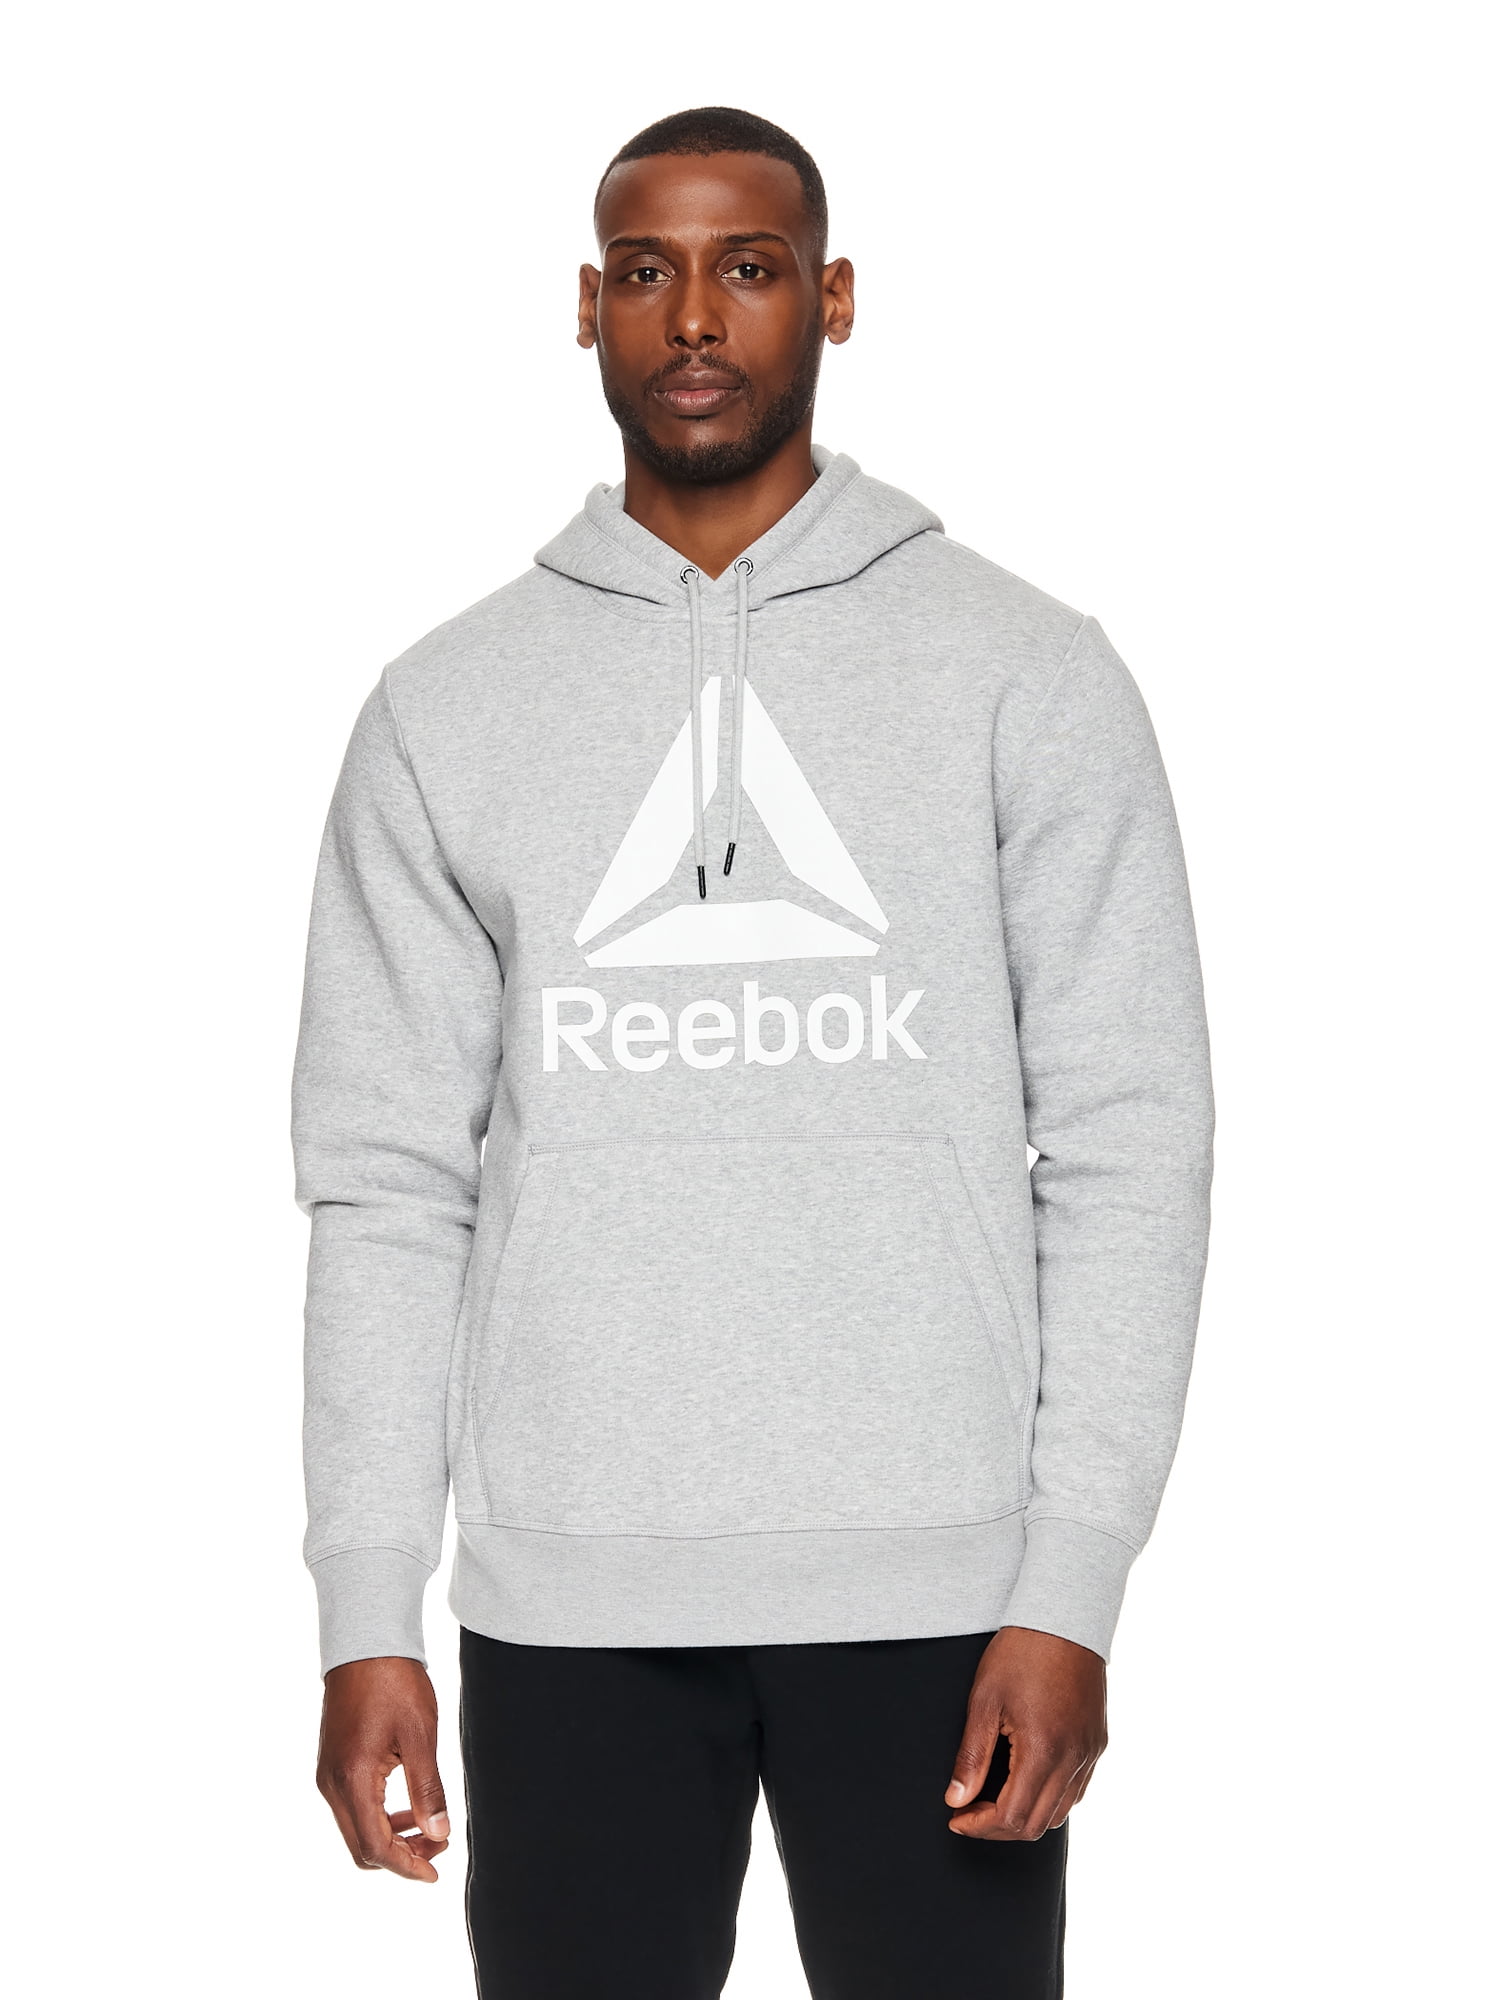 Reebok Men's Delta Logo Fleece Hoodie, Sizes S-XL - Walmart.com